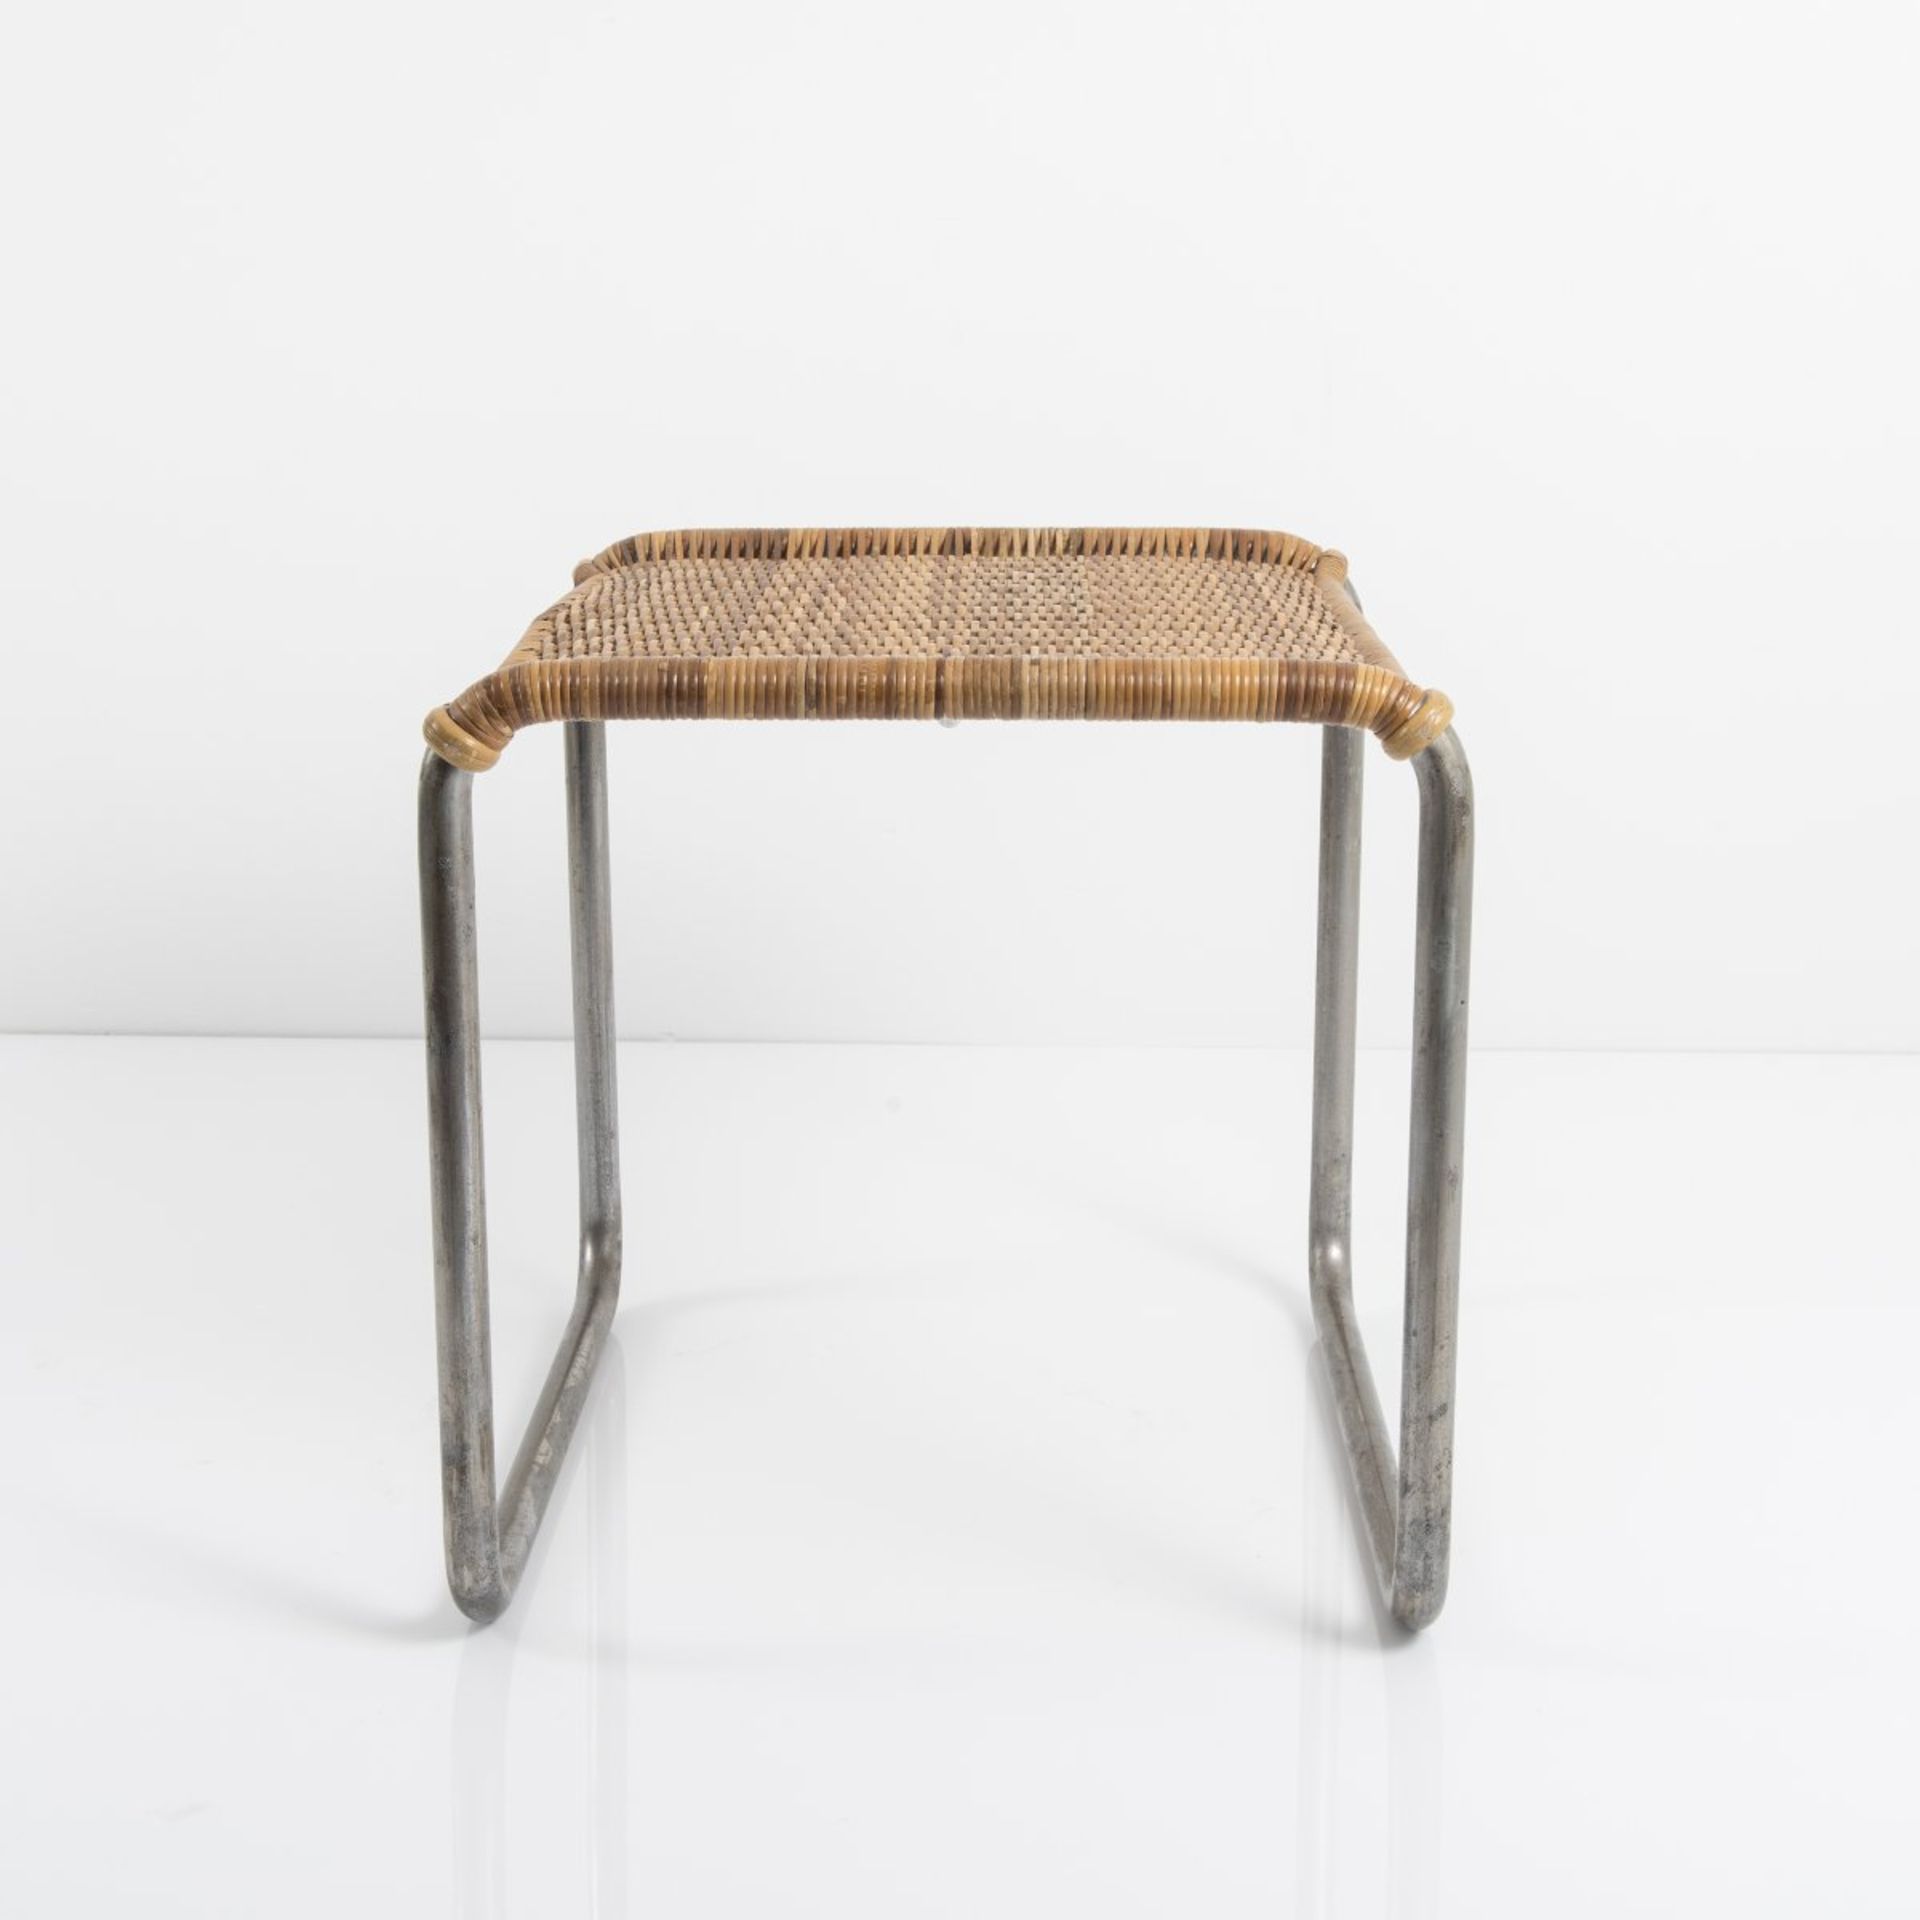 Ludwig Mies van der Rohe, 'MR 1' stool, 1927 - Image 2 of 4